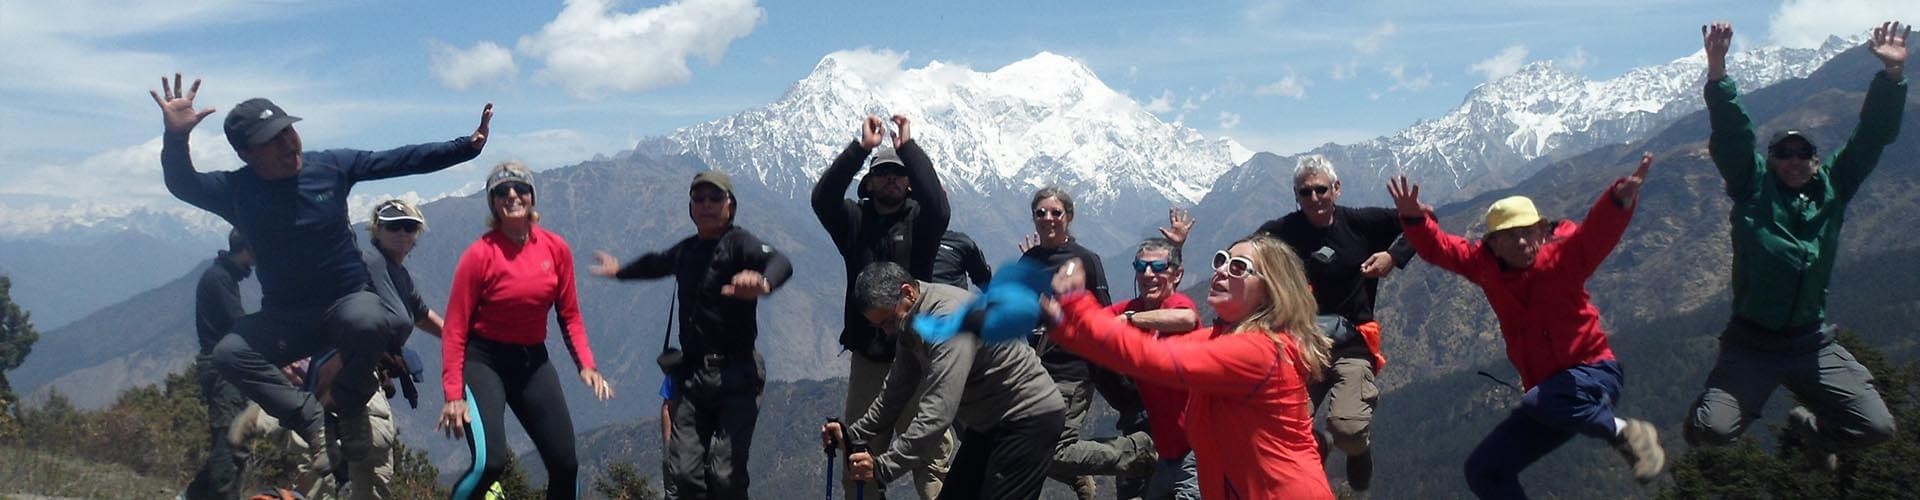 happy trekkers in Nepal